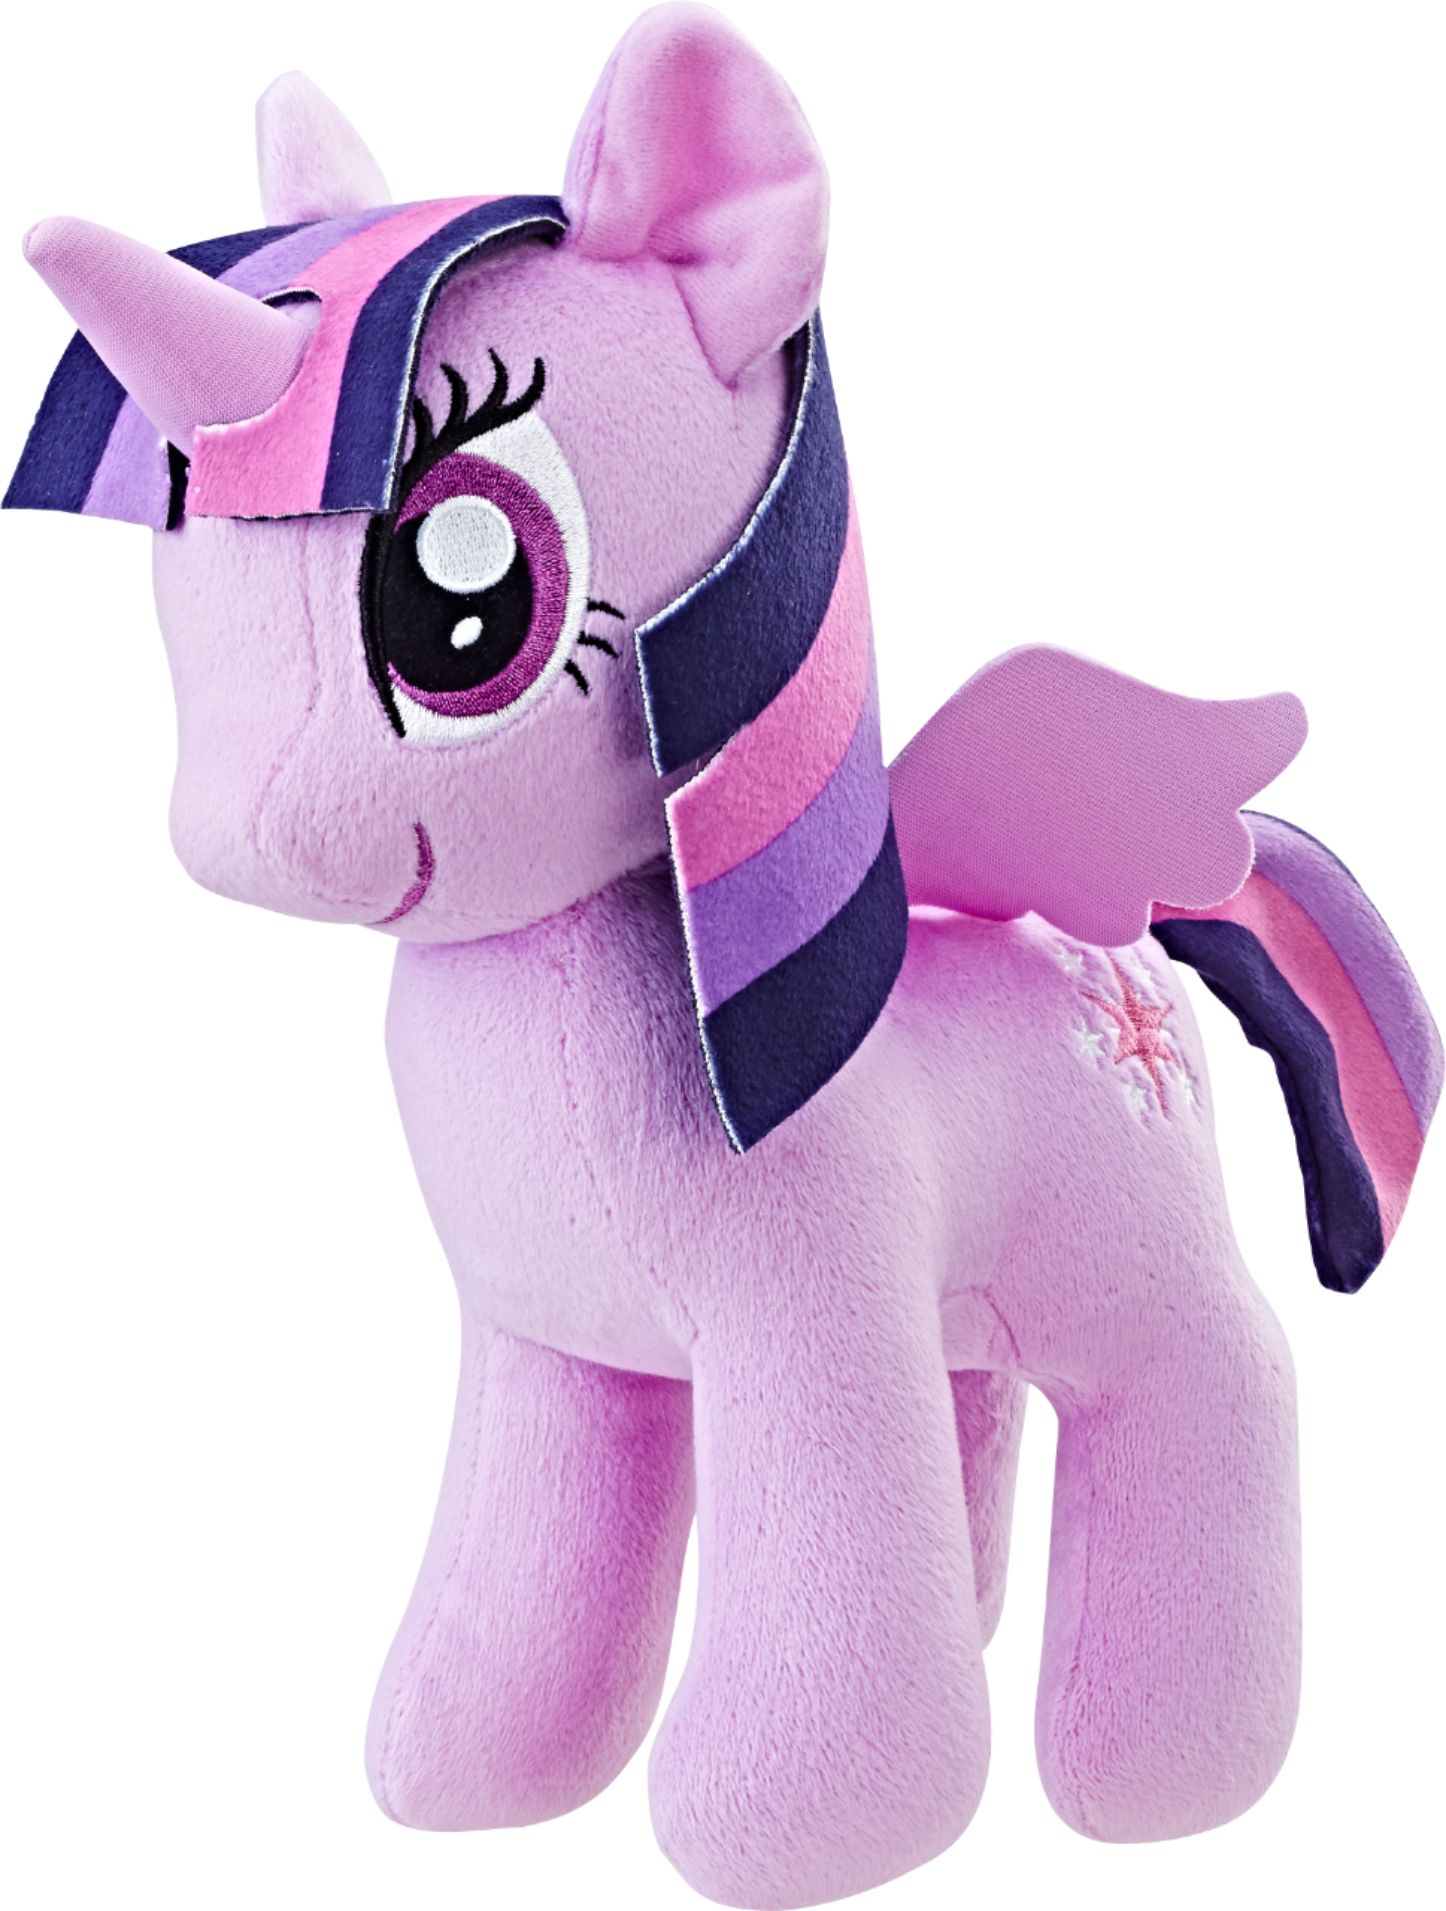 My Little Pony Soft Plush Figure Styles May Vary B9820 - Best Buy